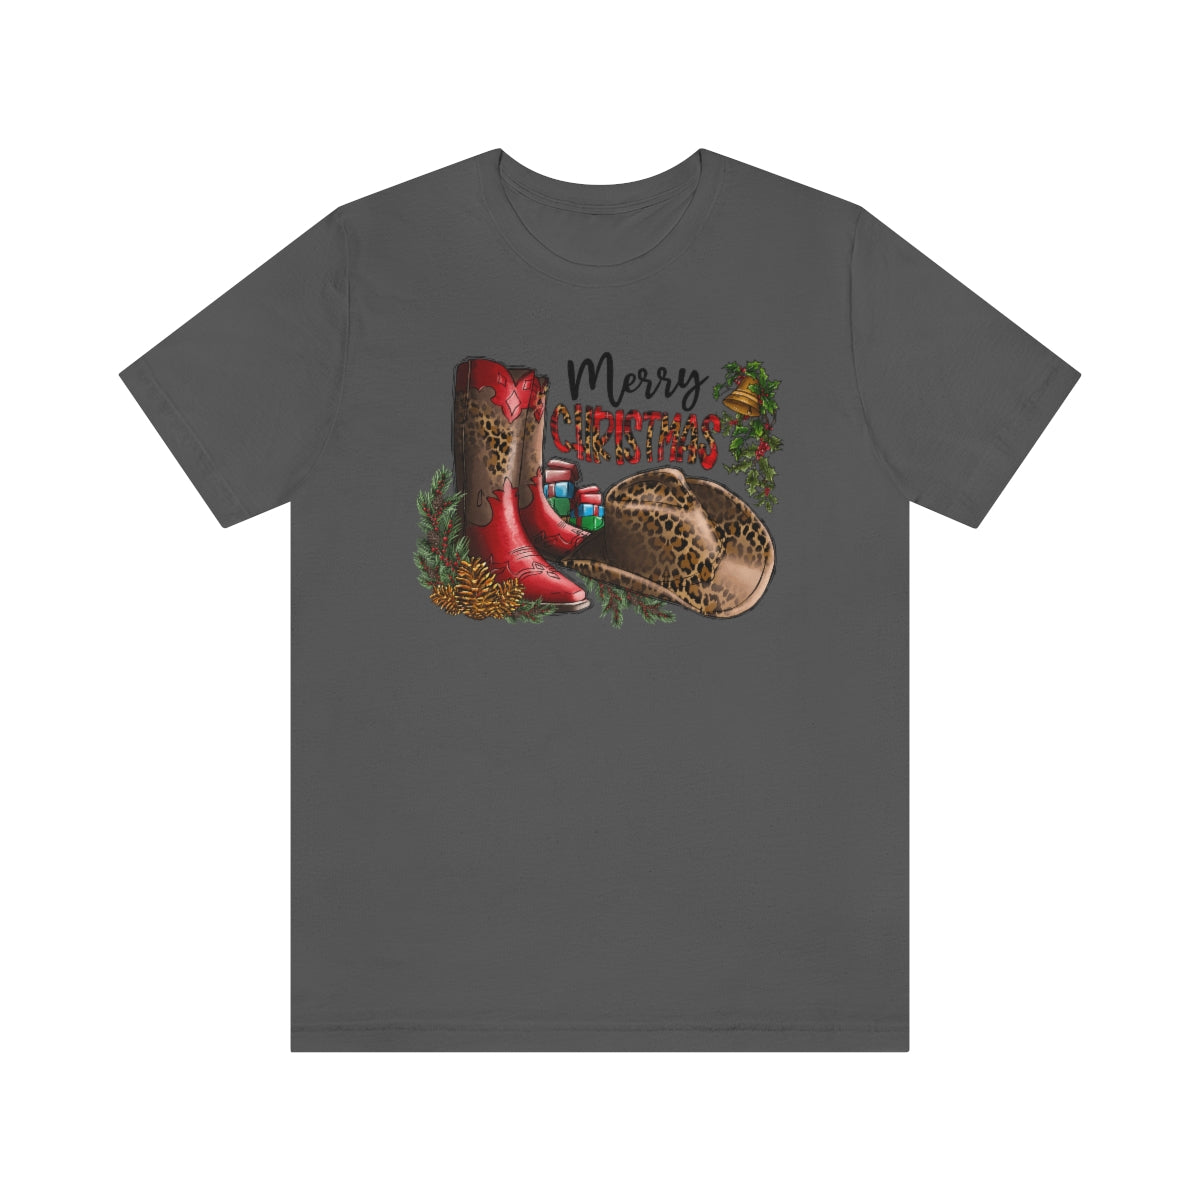 Merry Christmas Boots Shirt